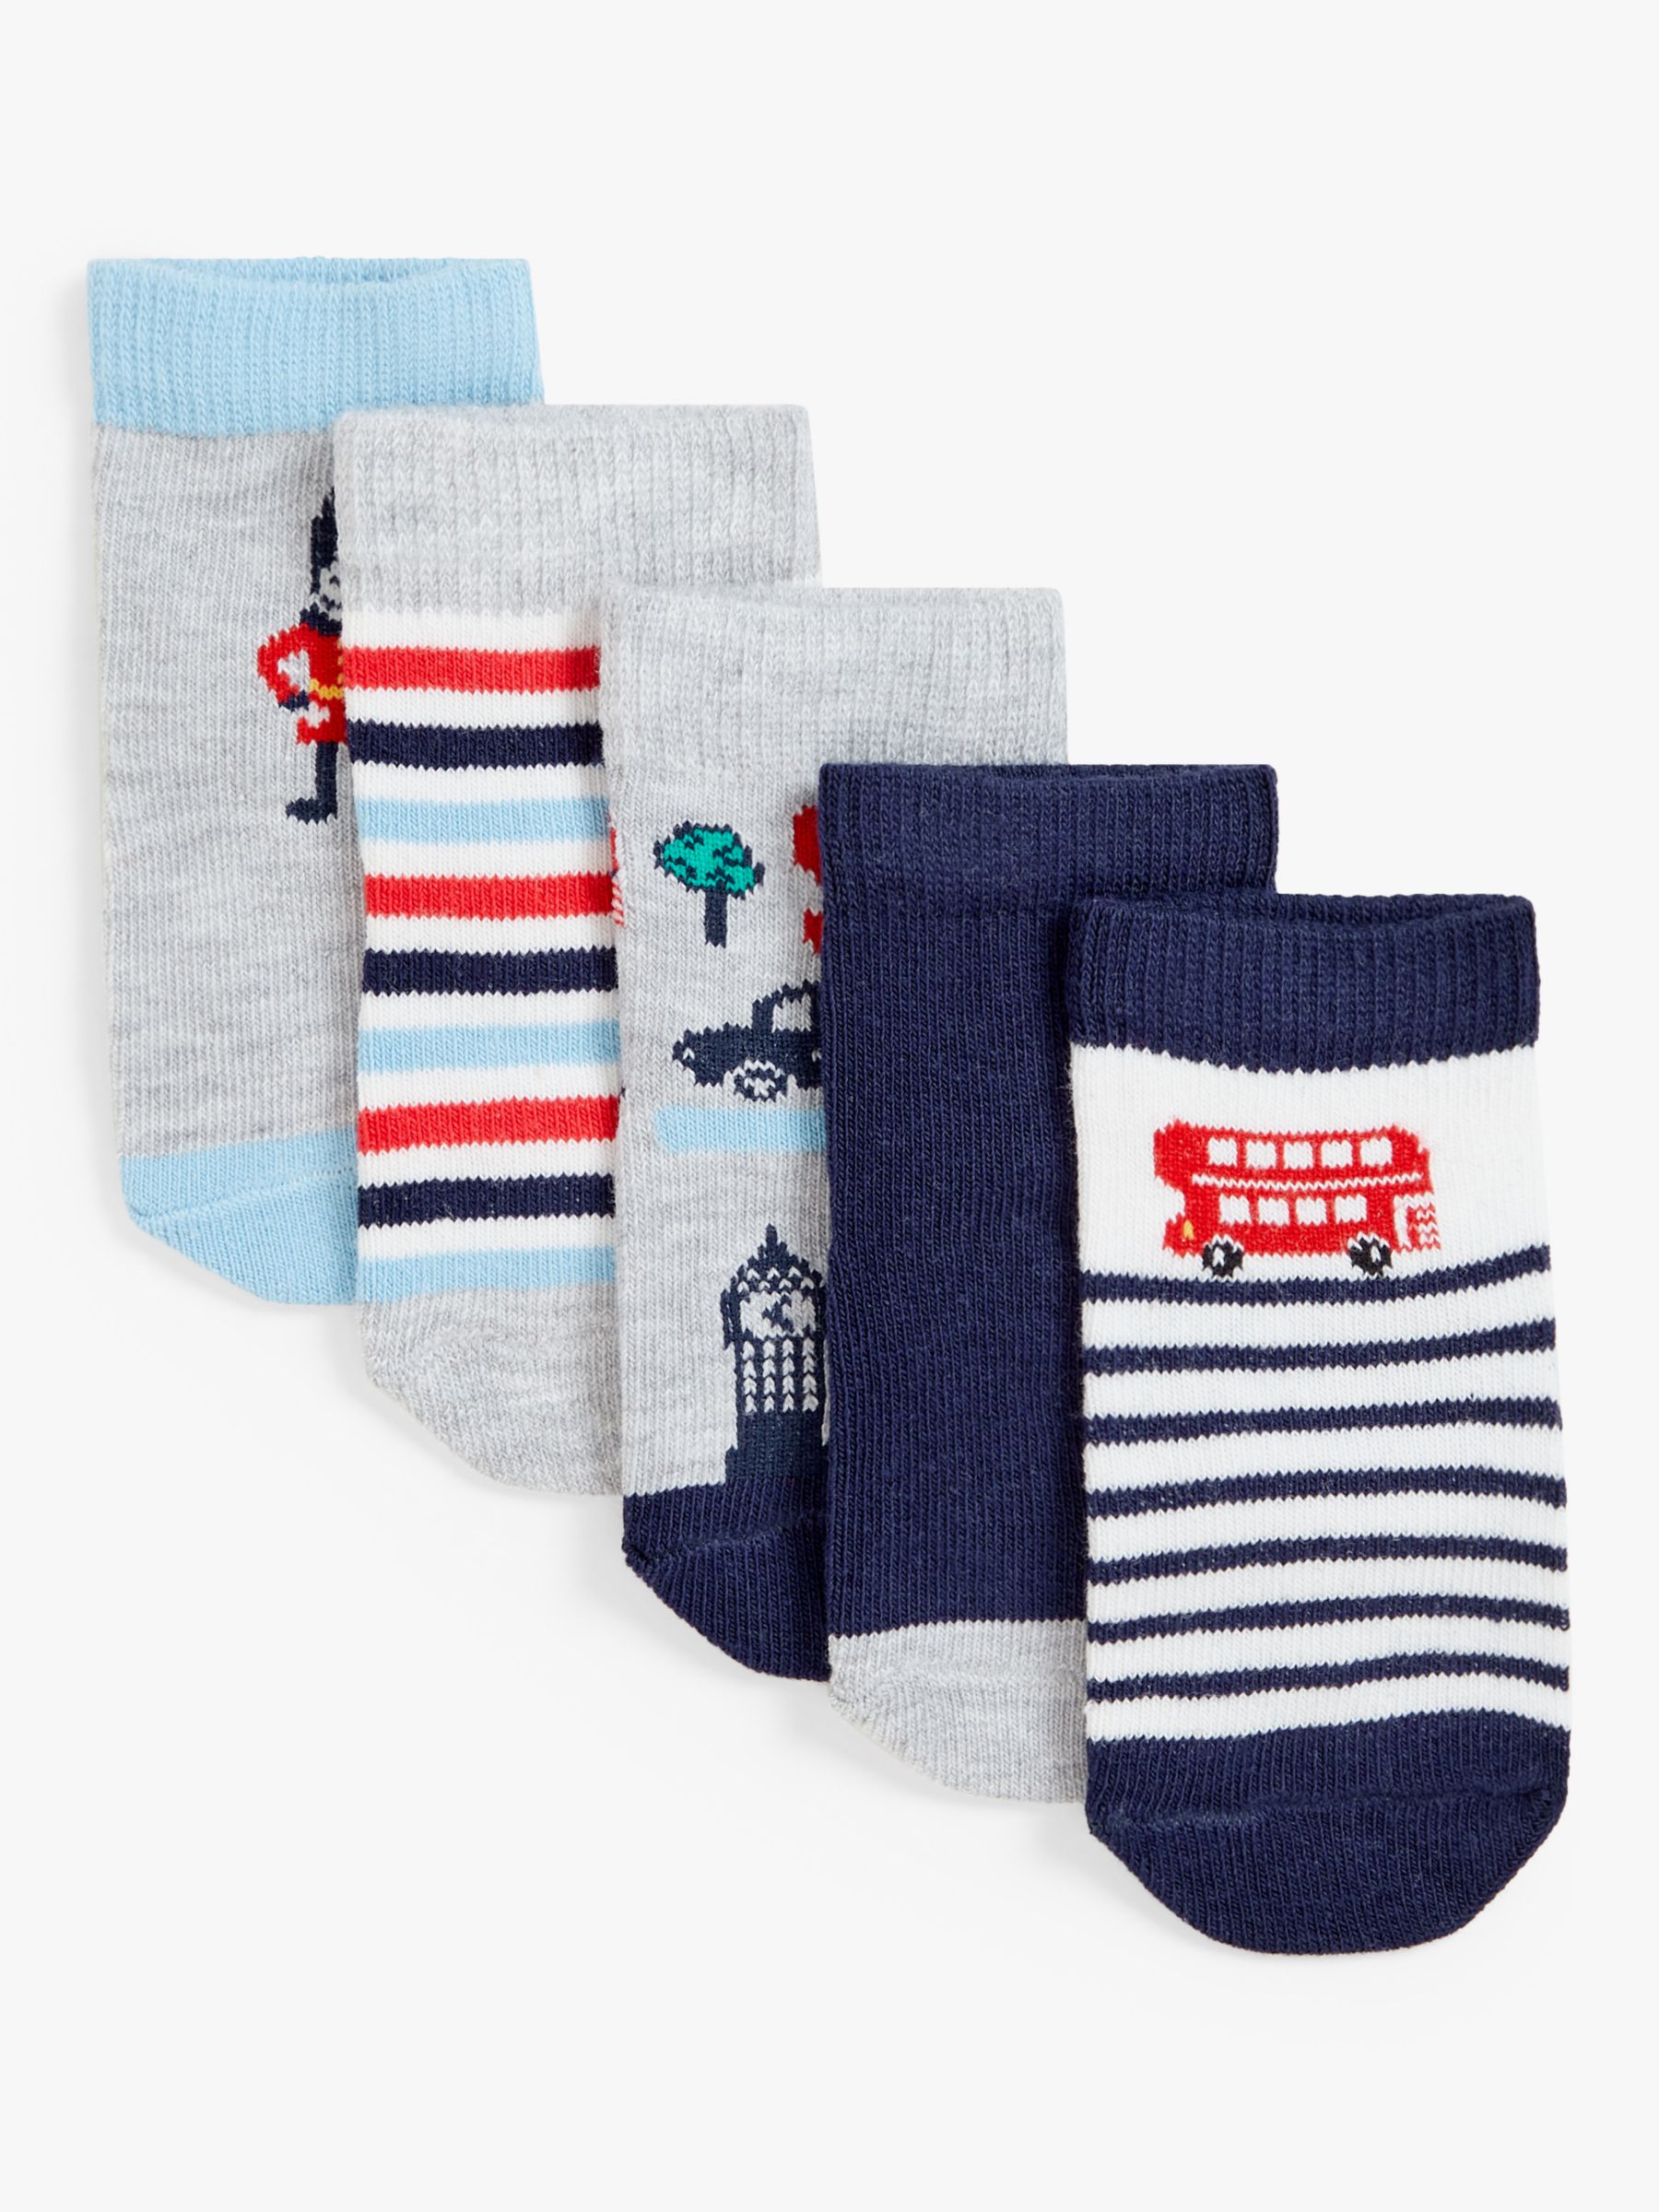 John Lewis Baby Organic Cotton Rich London Transport Theme Socks, Pack of 5, Multi, 0-3 months